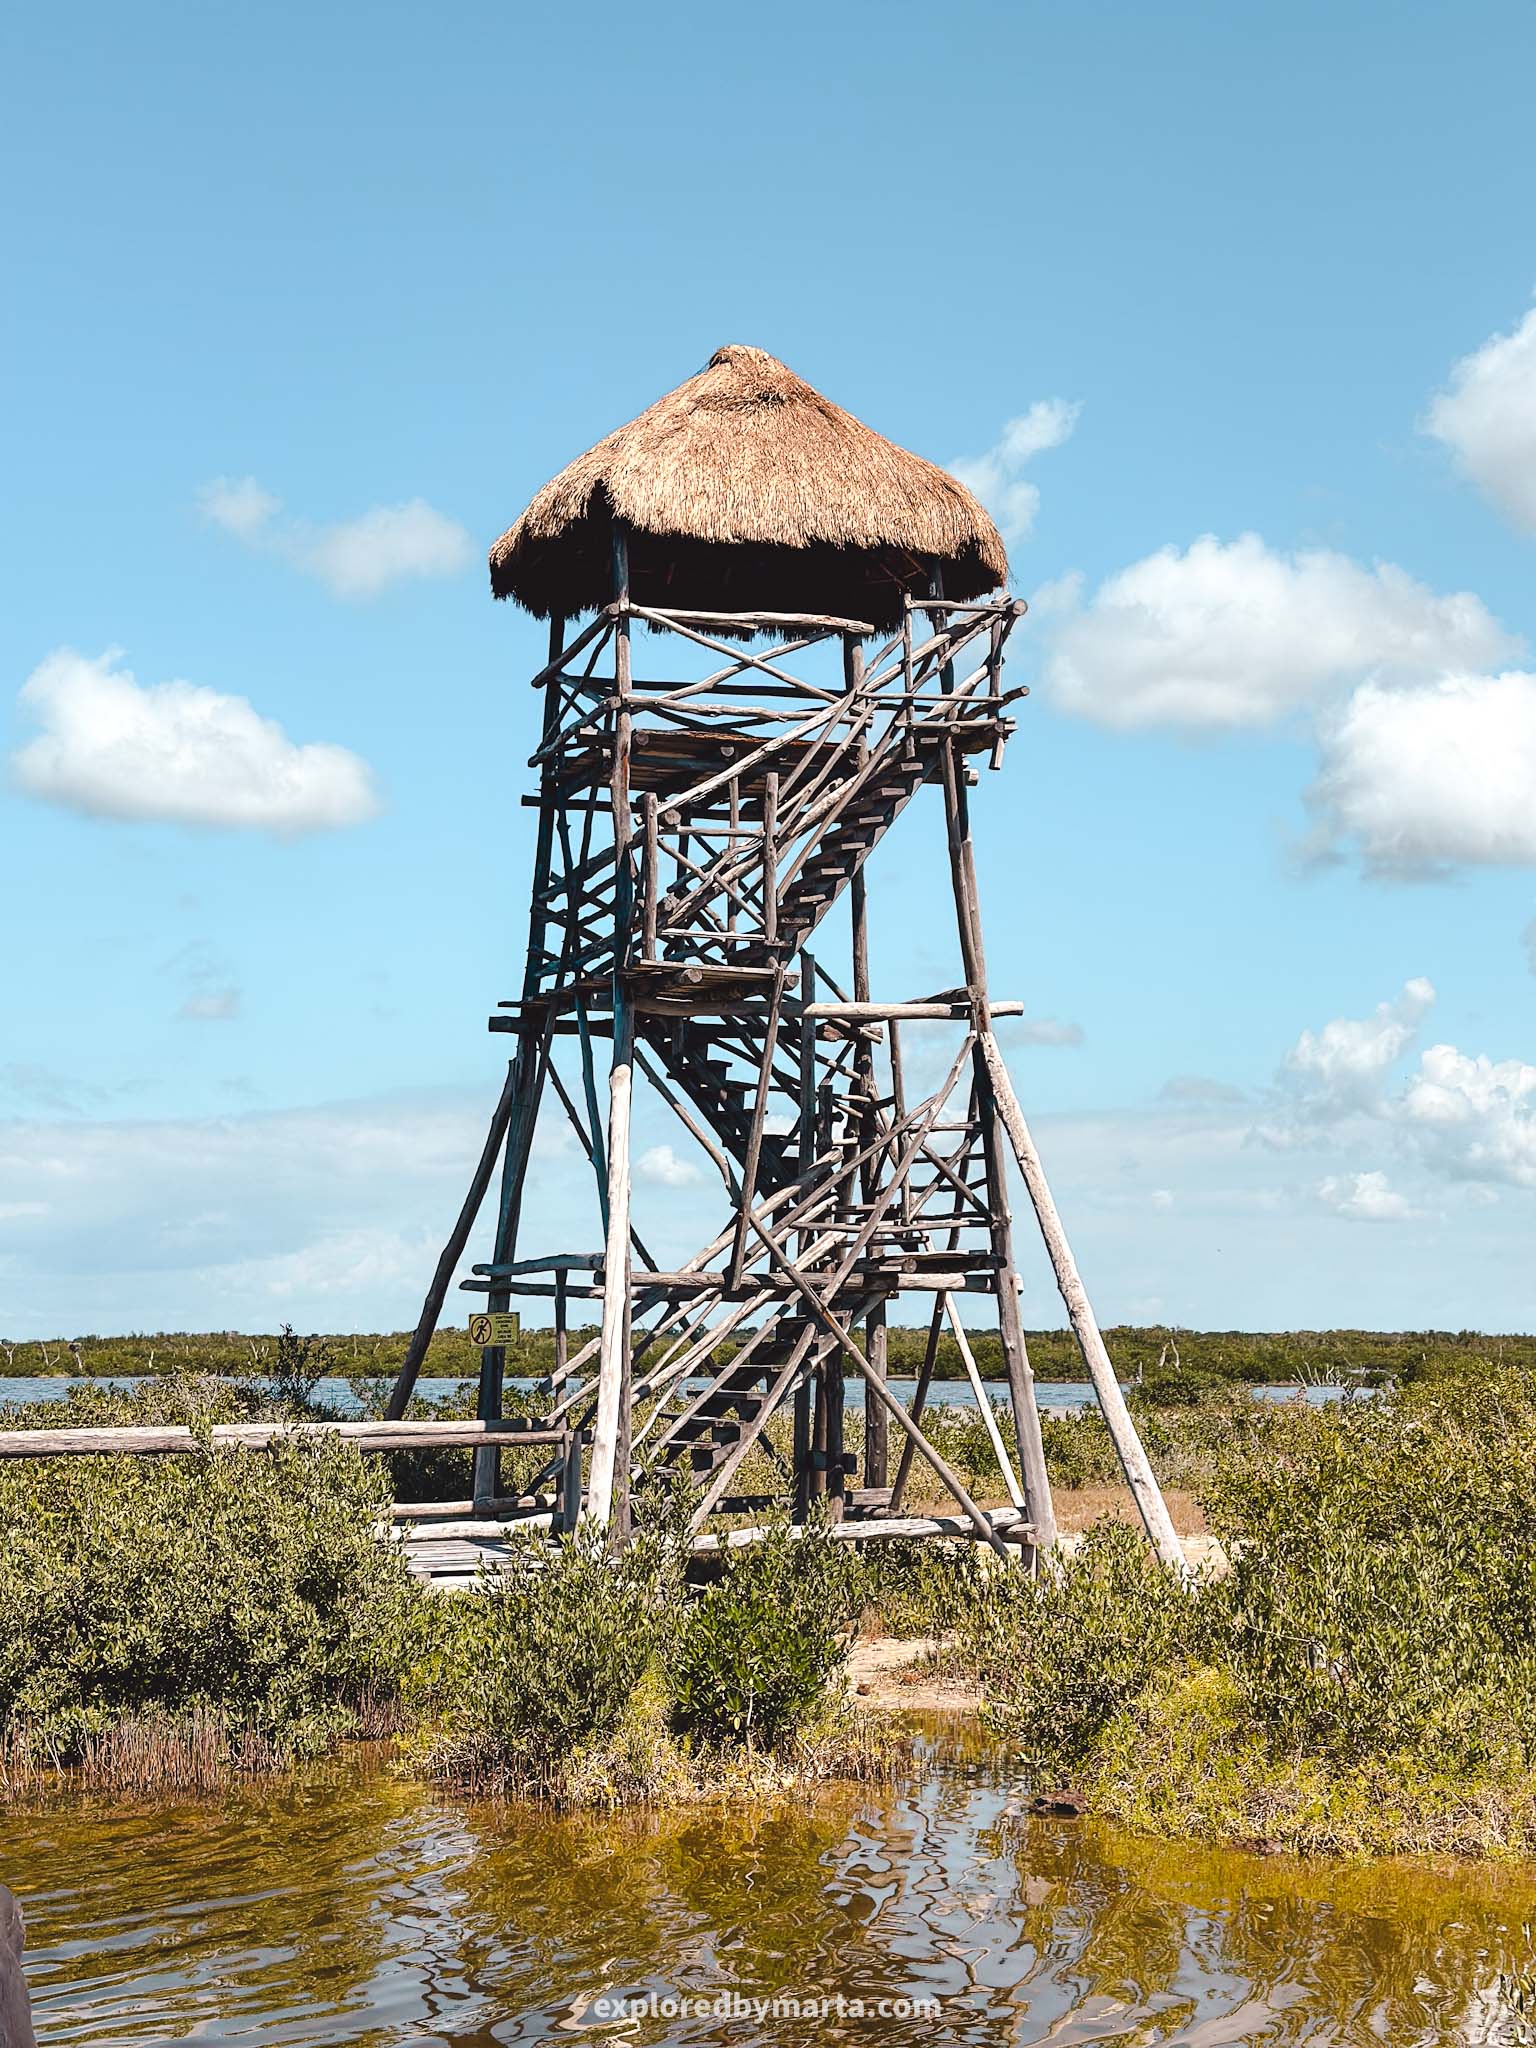 Cozumel, Mexico - Crocodile watchtower in Punta Sur Eco Park